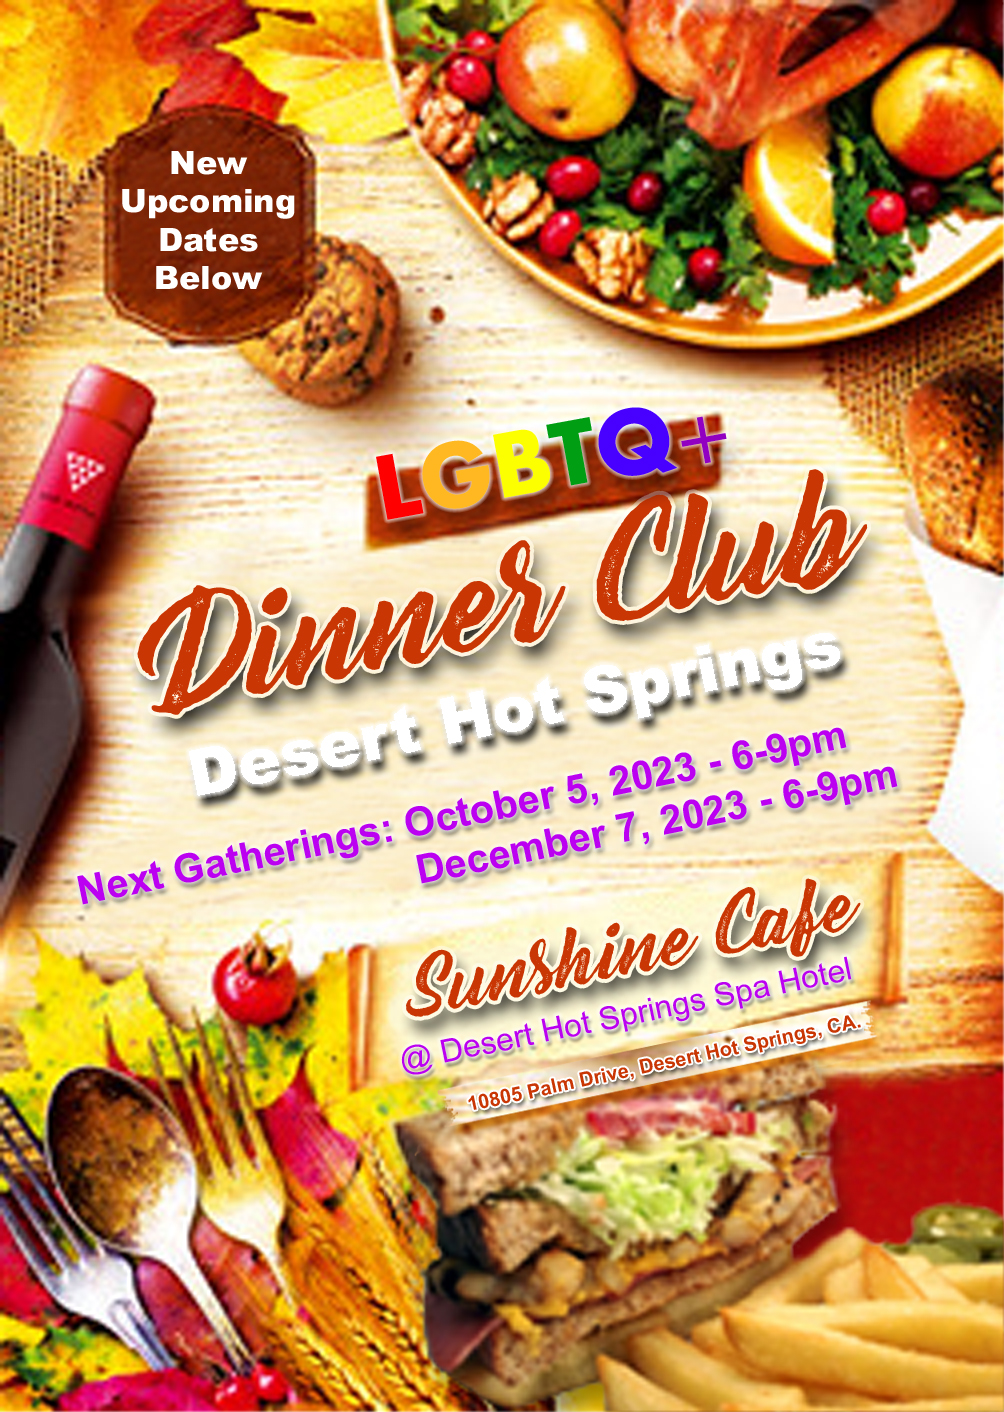 LGBTQ+ Dinner Club<br />
Sunshine Cafe @ Desert Hot Springs Spa Hotel</p>
<p>October 5, 2023 - 6-9pm</p>
<p>10805 Palm Drive, Desert Hot Springs, CA.